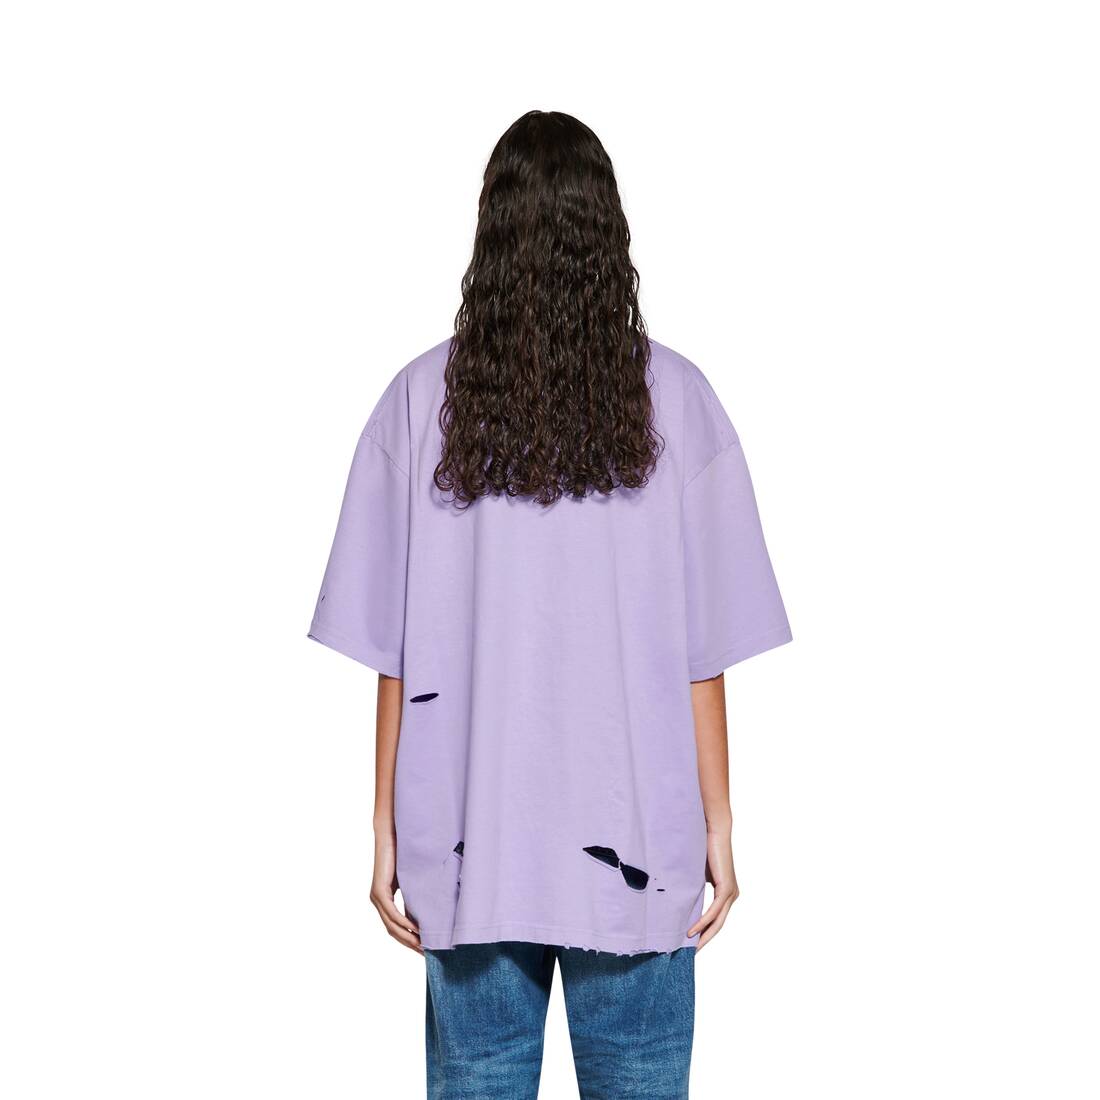 Balenciaga 2017 Campaign T-Shirt - Purple T-Shirts, Clothing